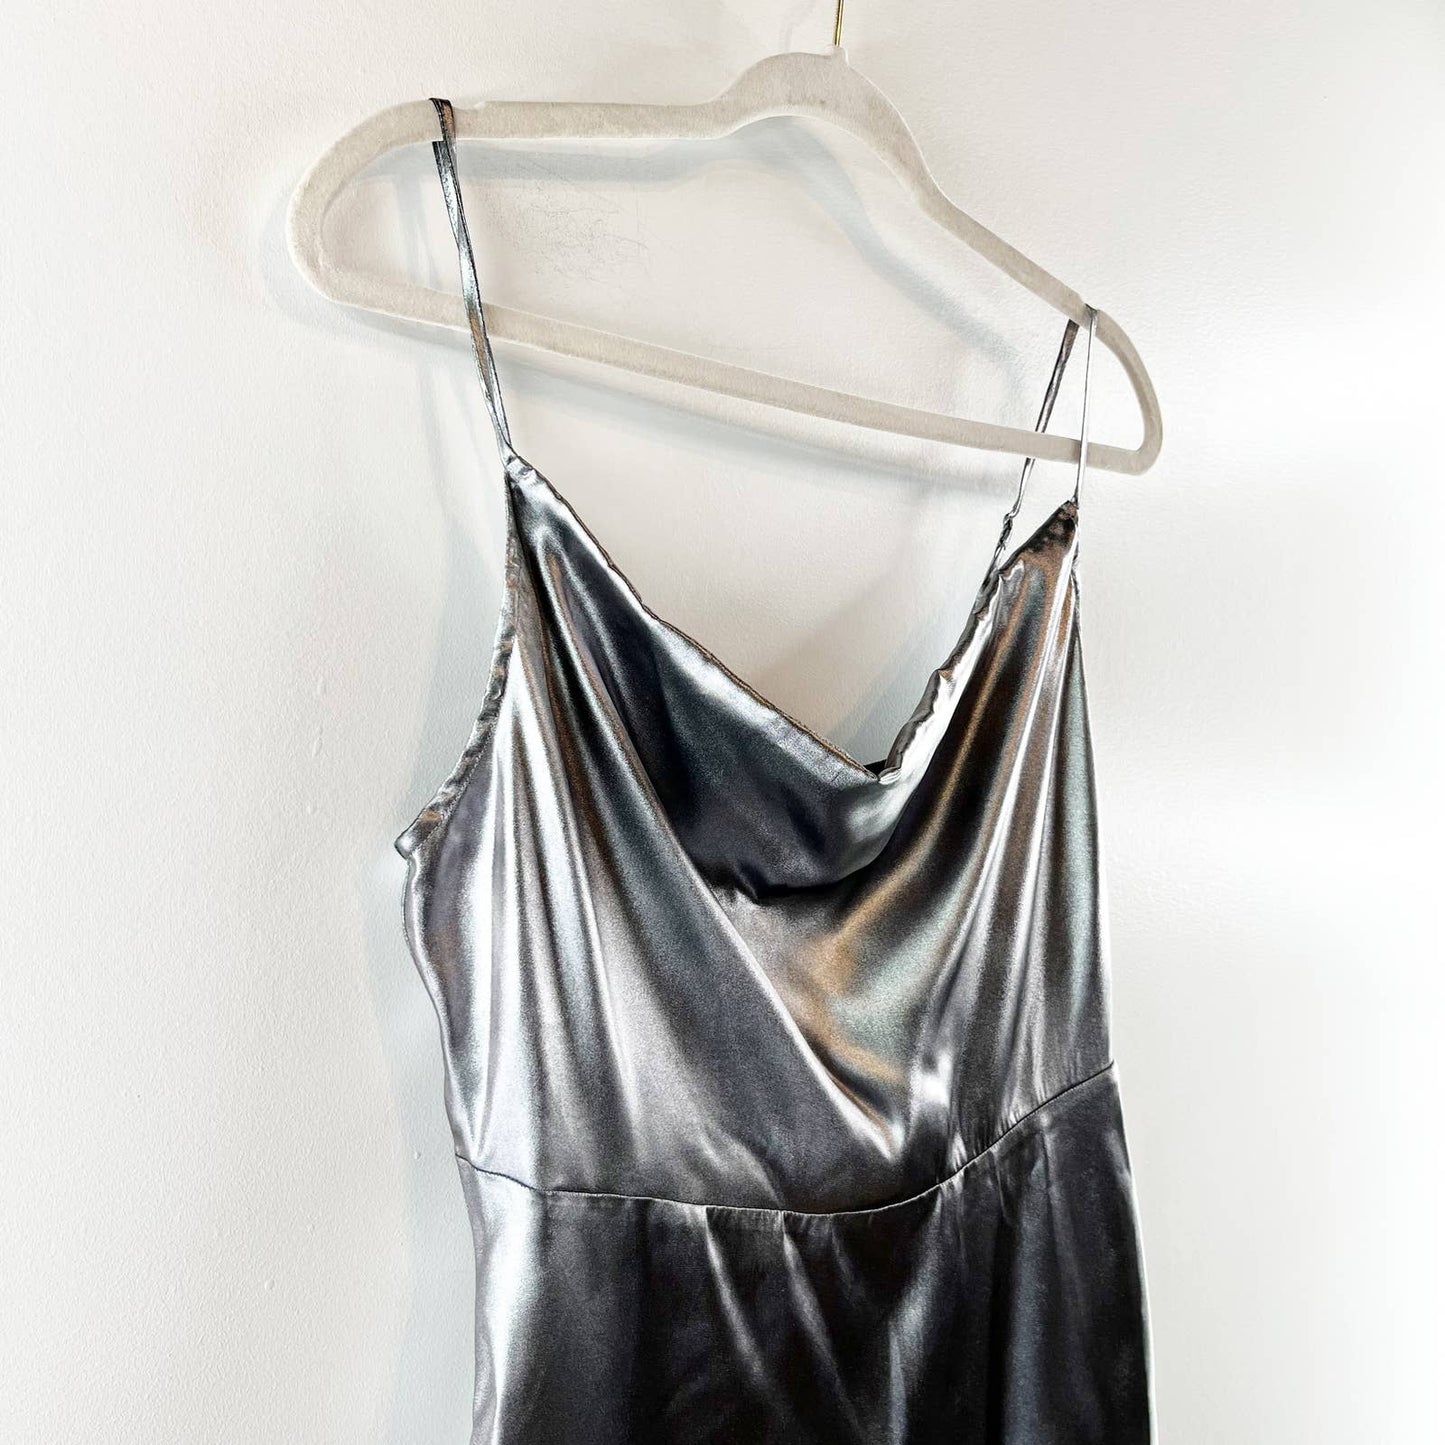 Urban Outfitters Mallory Metallic Asymmetrical Cowl Neck Slip Dress Silver M NWT